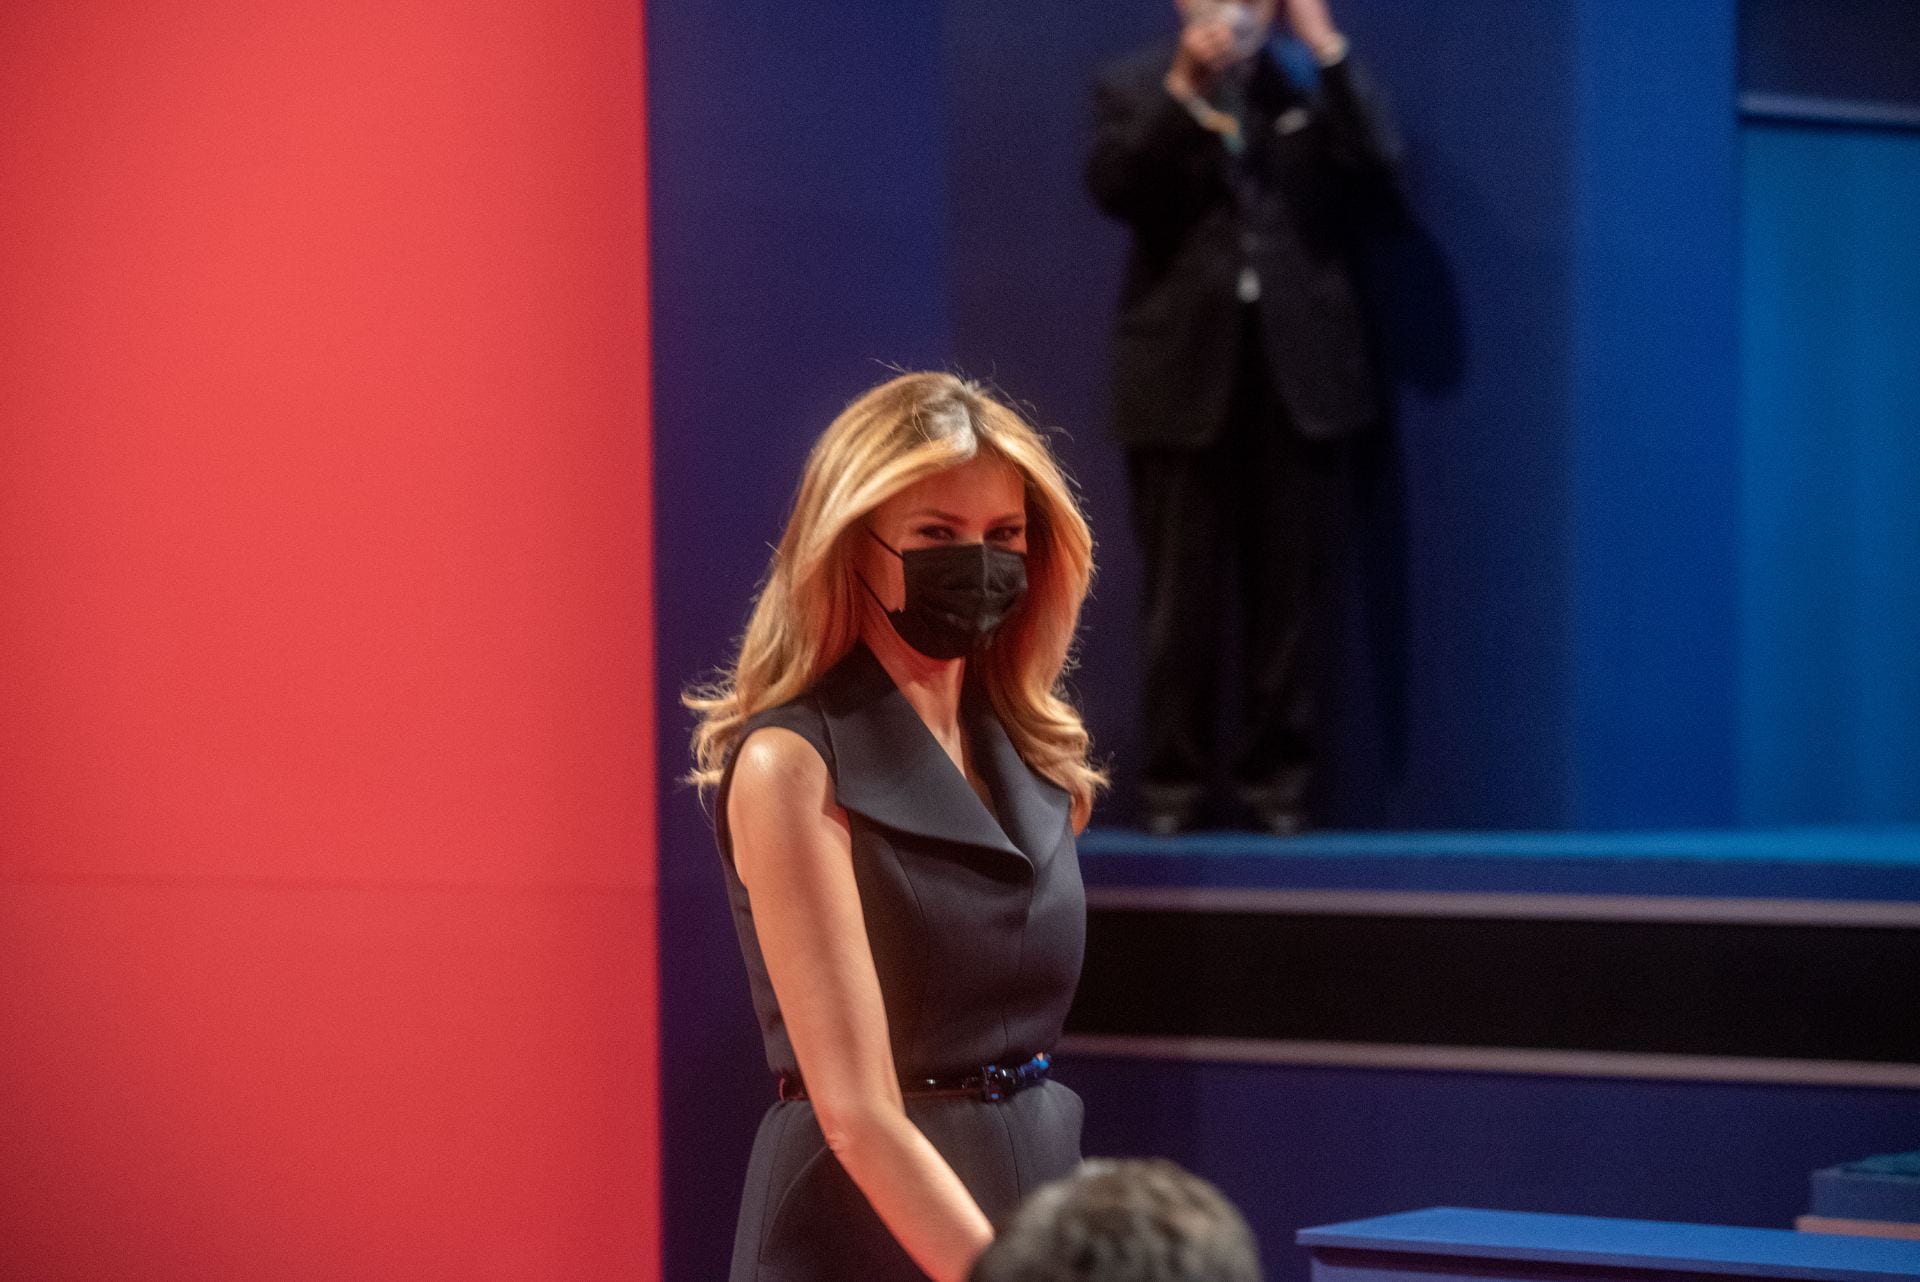 (Former) First lady Melania Trump walking into debate hall